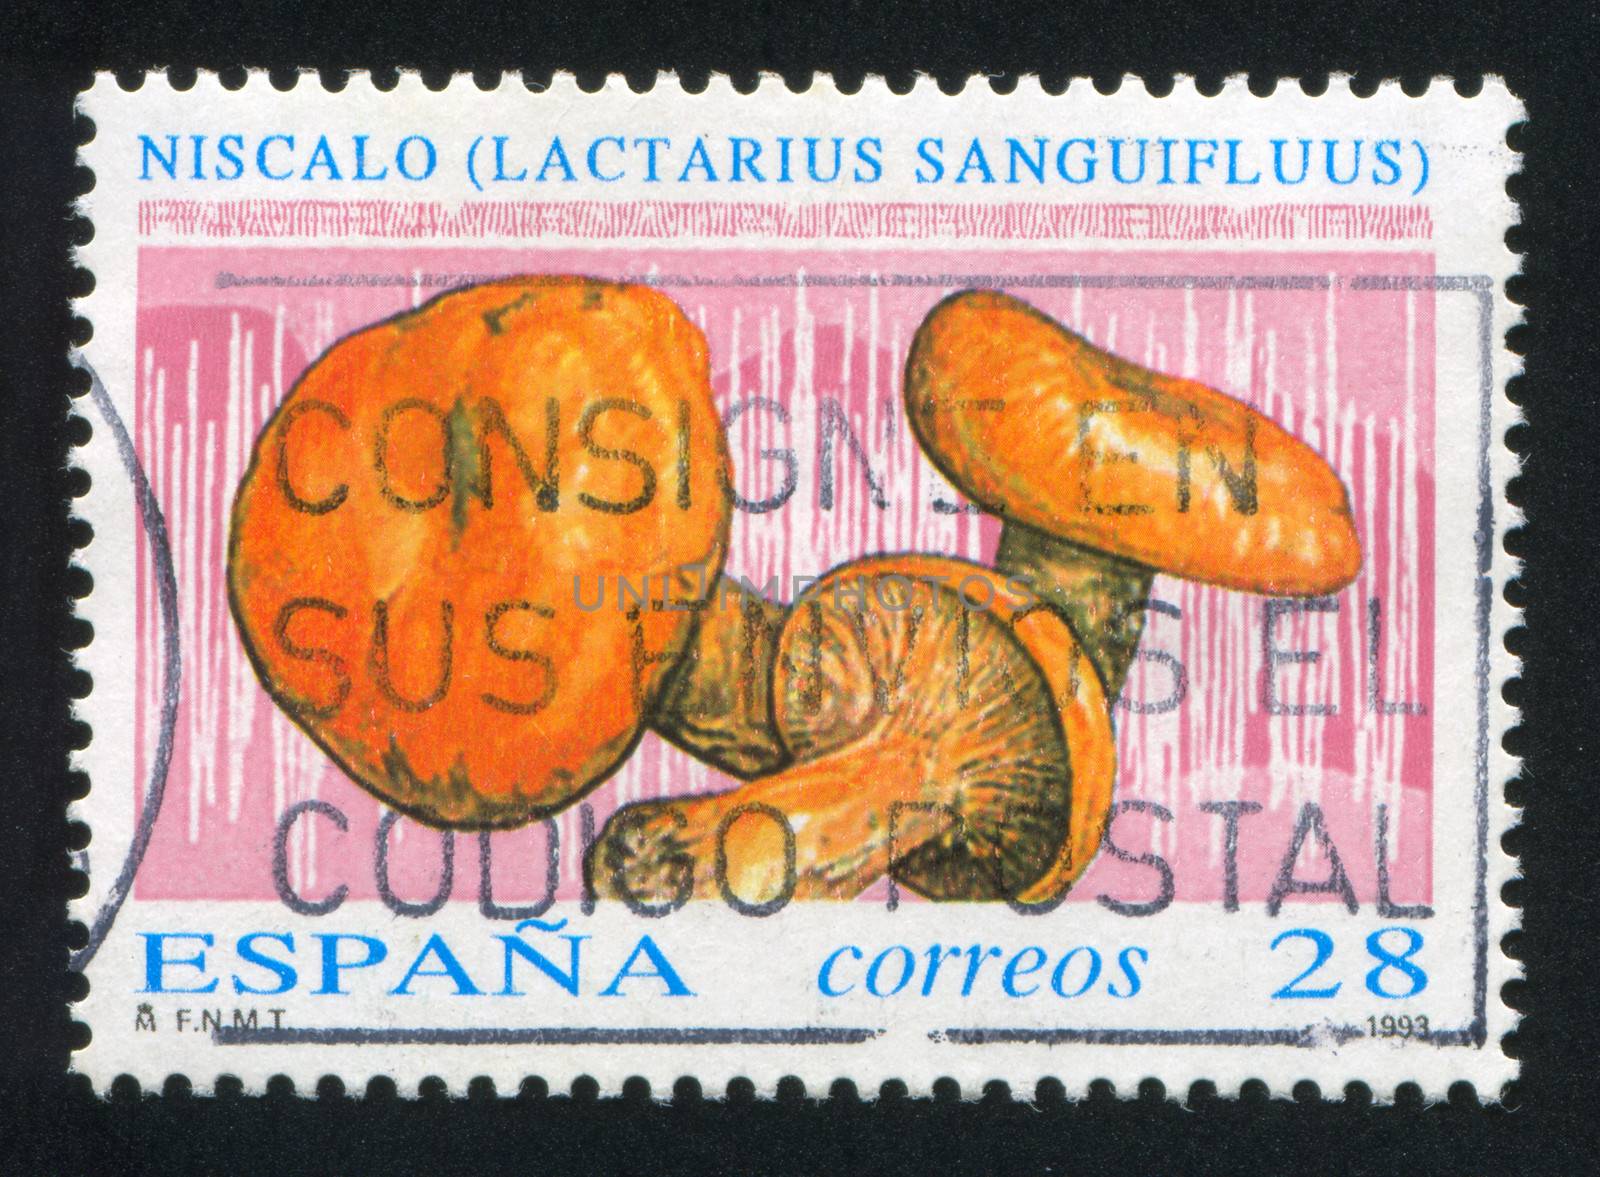 SPAIN - CIRCA 1993: stamp printed by Spain, shows Russula cyanoxantha, circa 1993